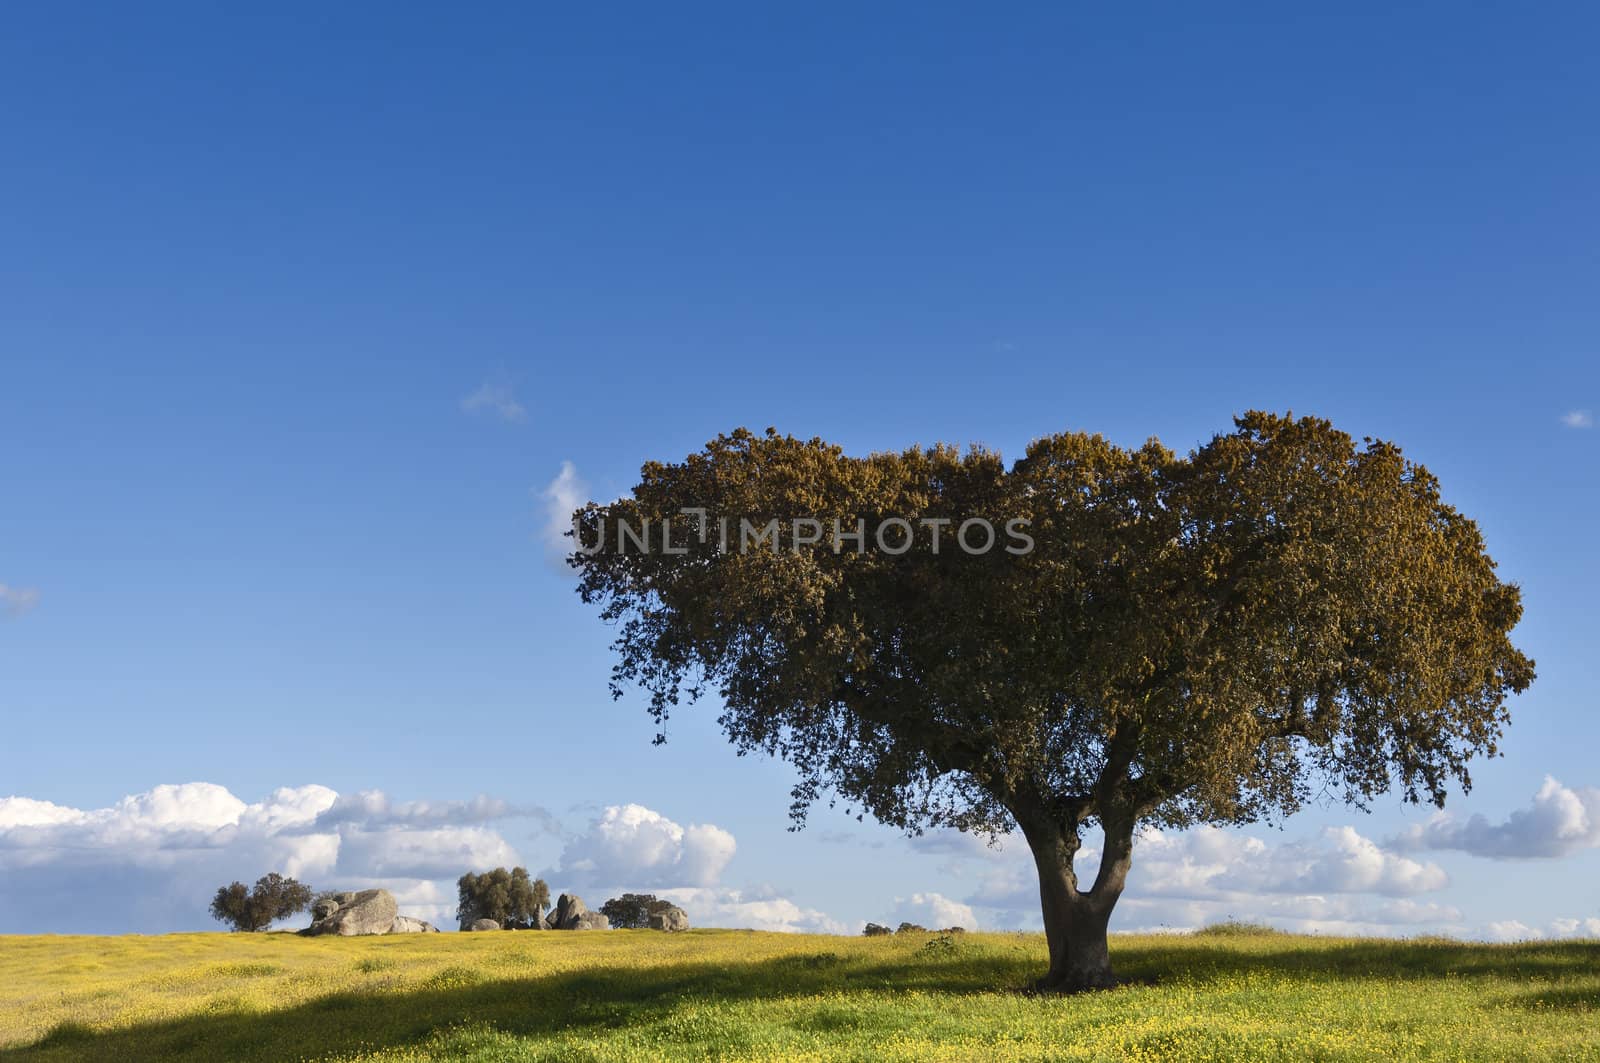 Holm oak - Quercus ilex - in the fields of Alentejo, Portugal